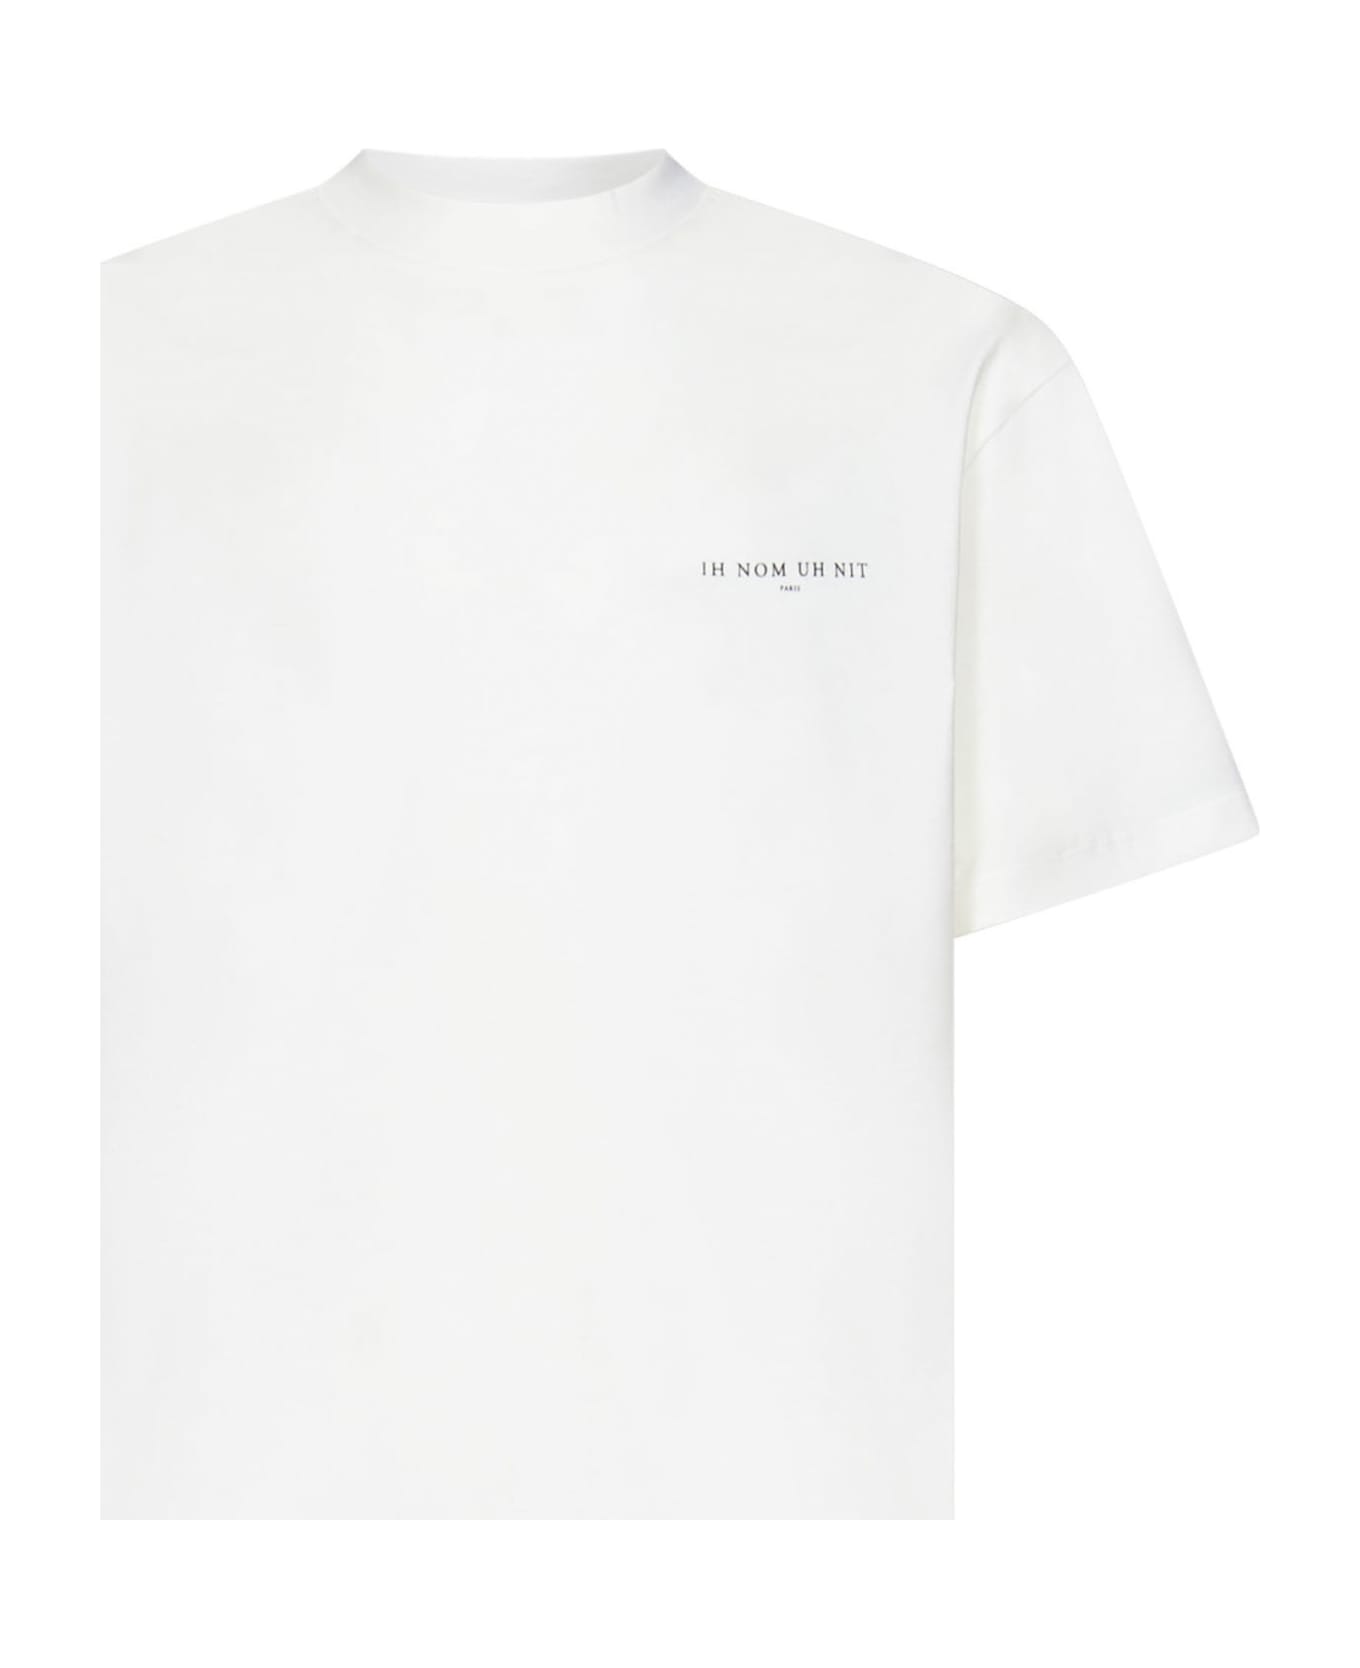 ih nom uh nit Black Pearl Roses T-shirt - Bianco